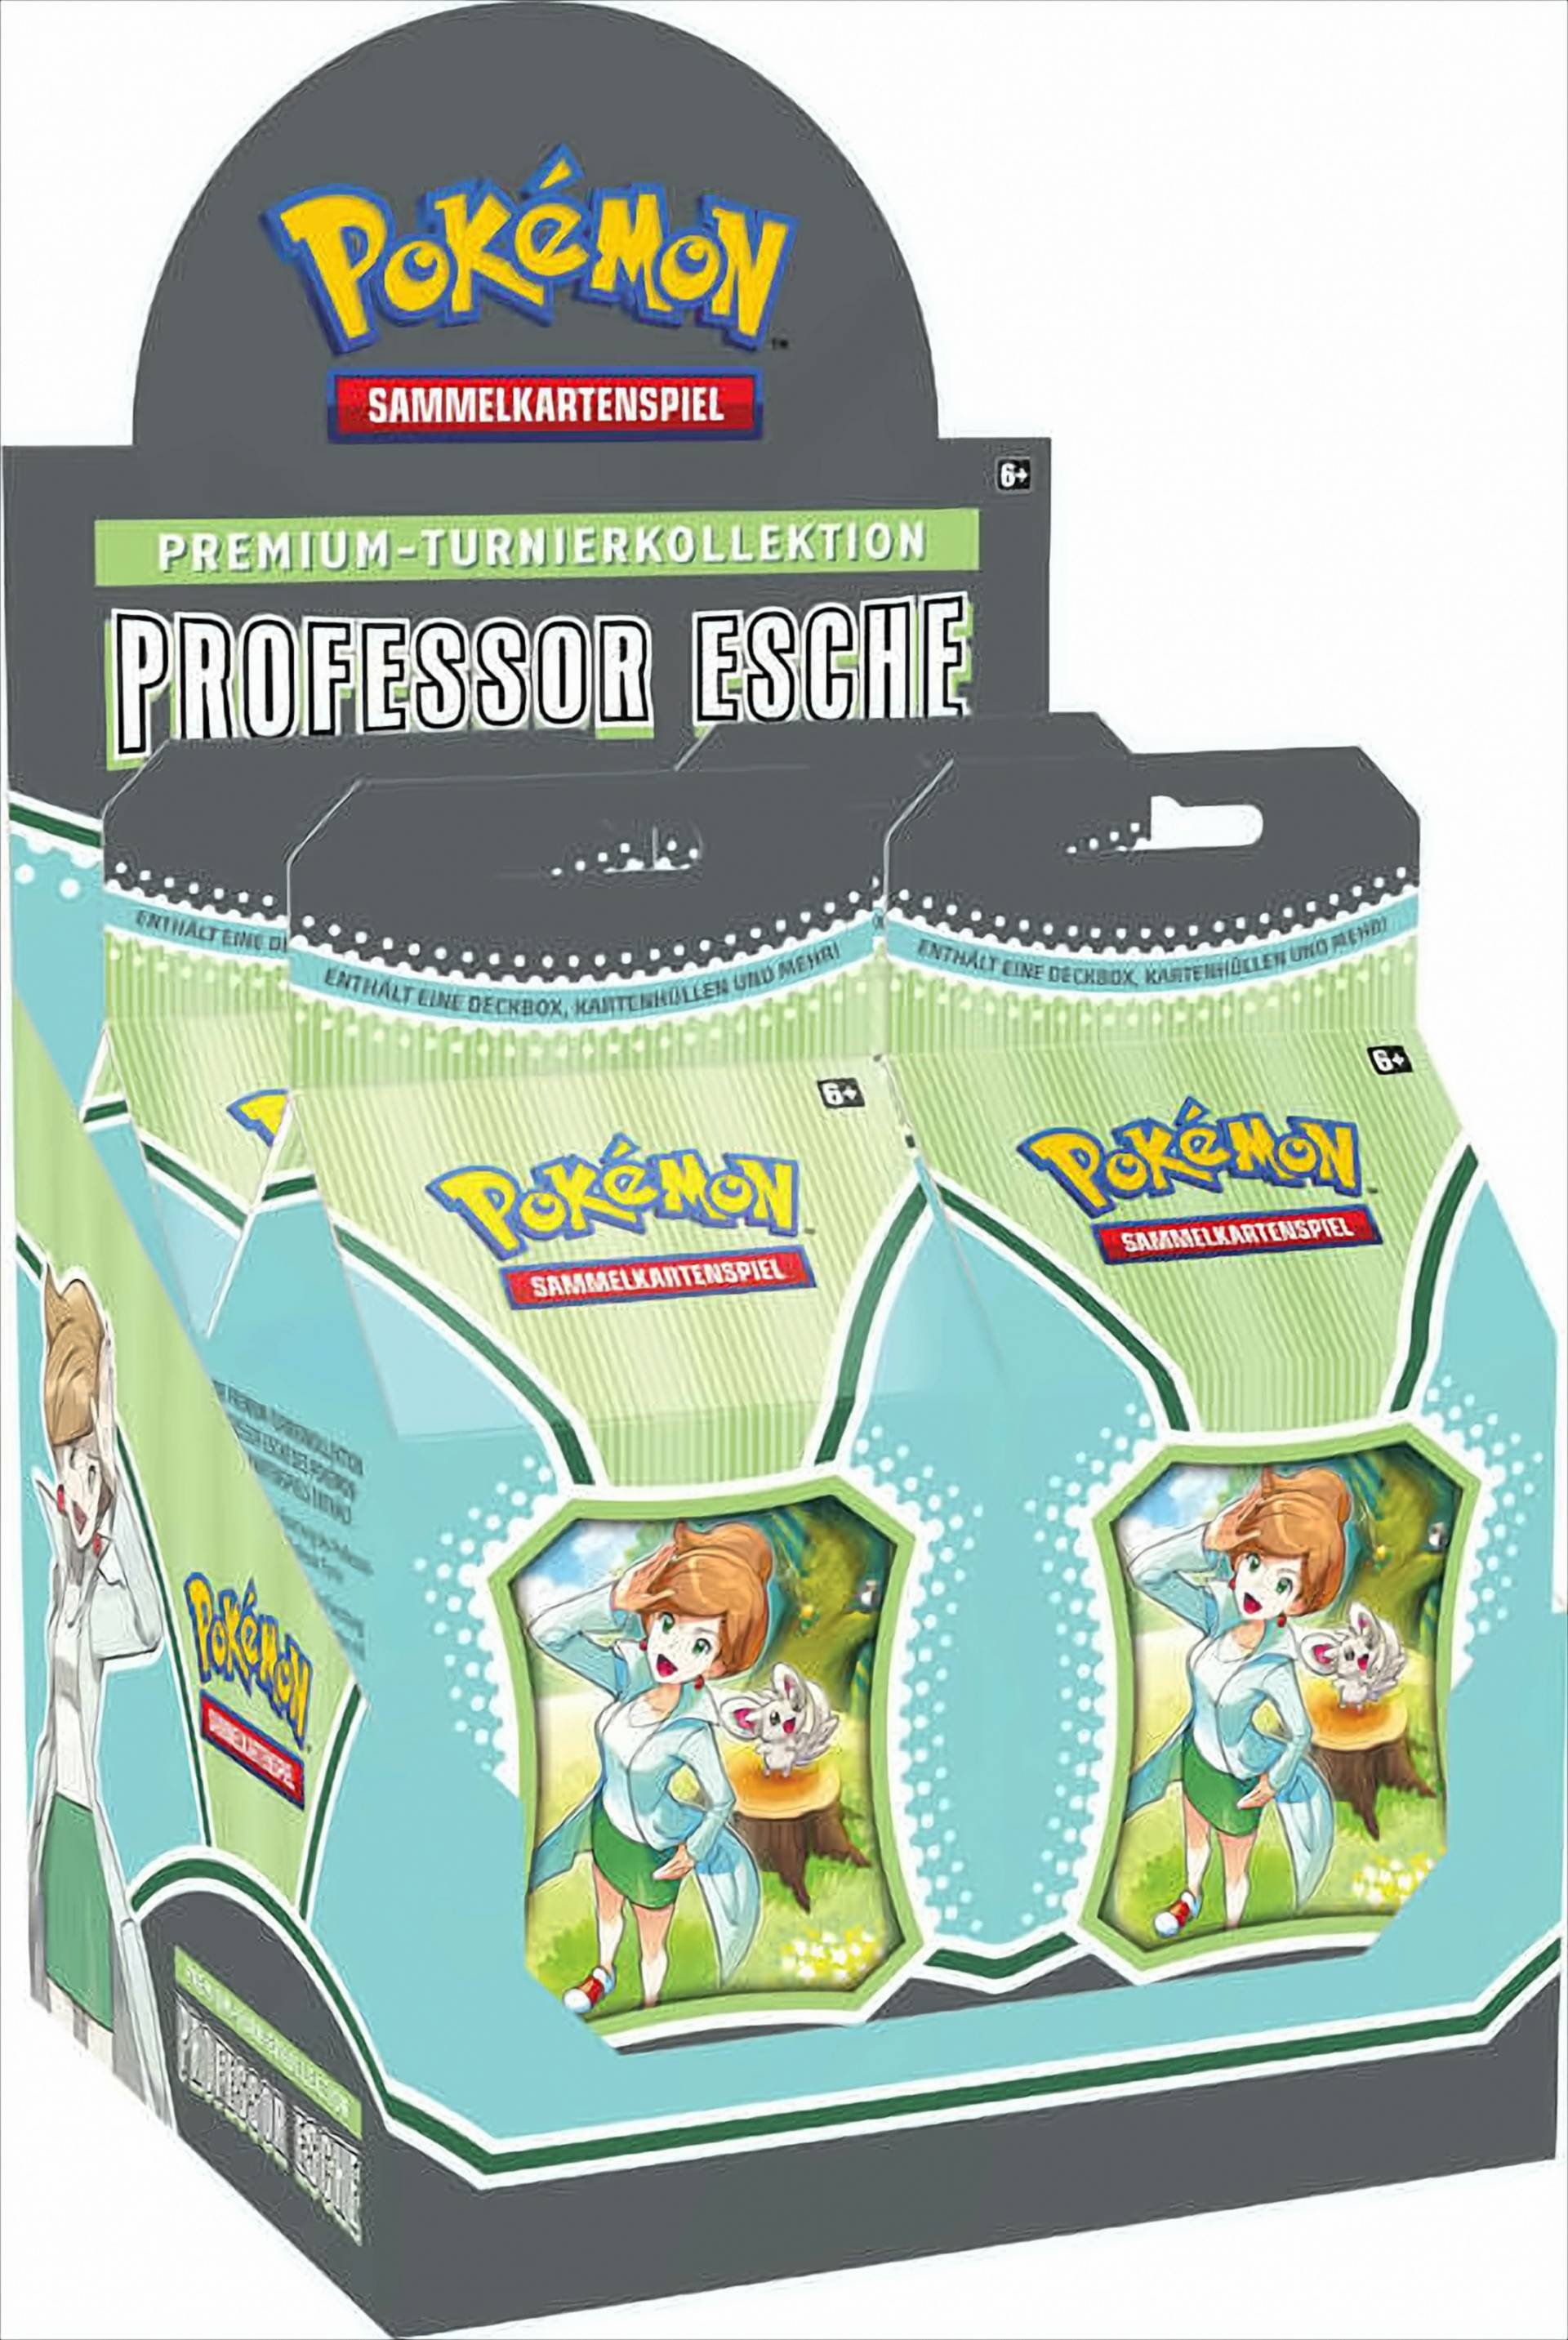 Pokémon Premium Turnierkollektion Professor Esche von The Pokemon Company